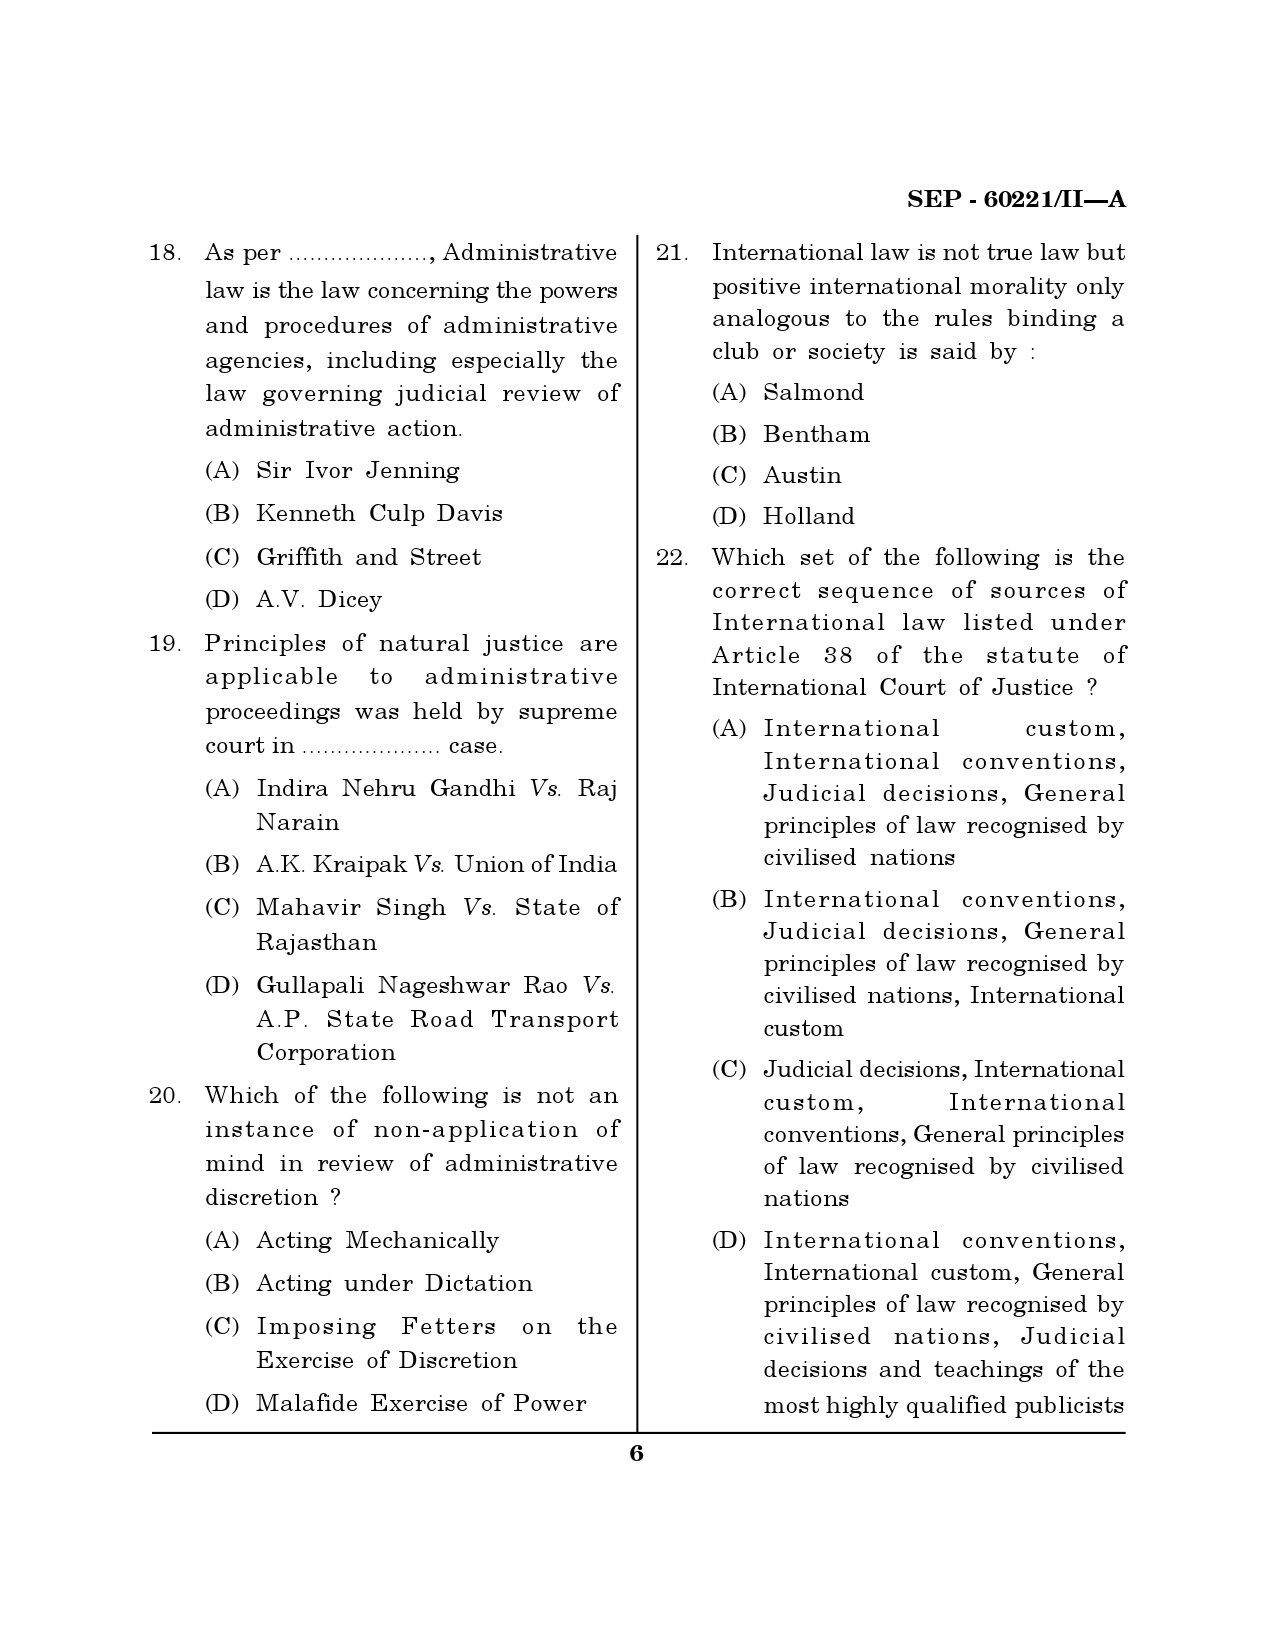 Maharashtra SET Law Exam Question Paper September 2021 5